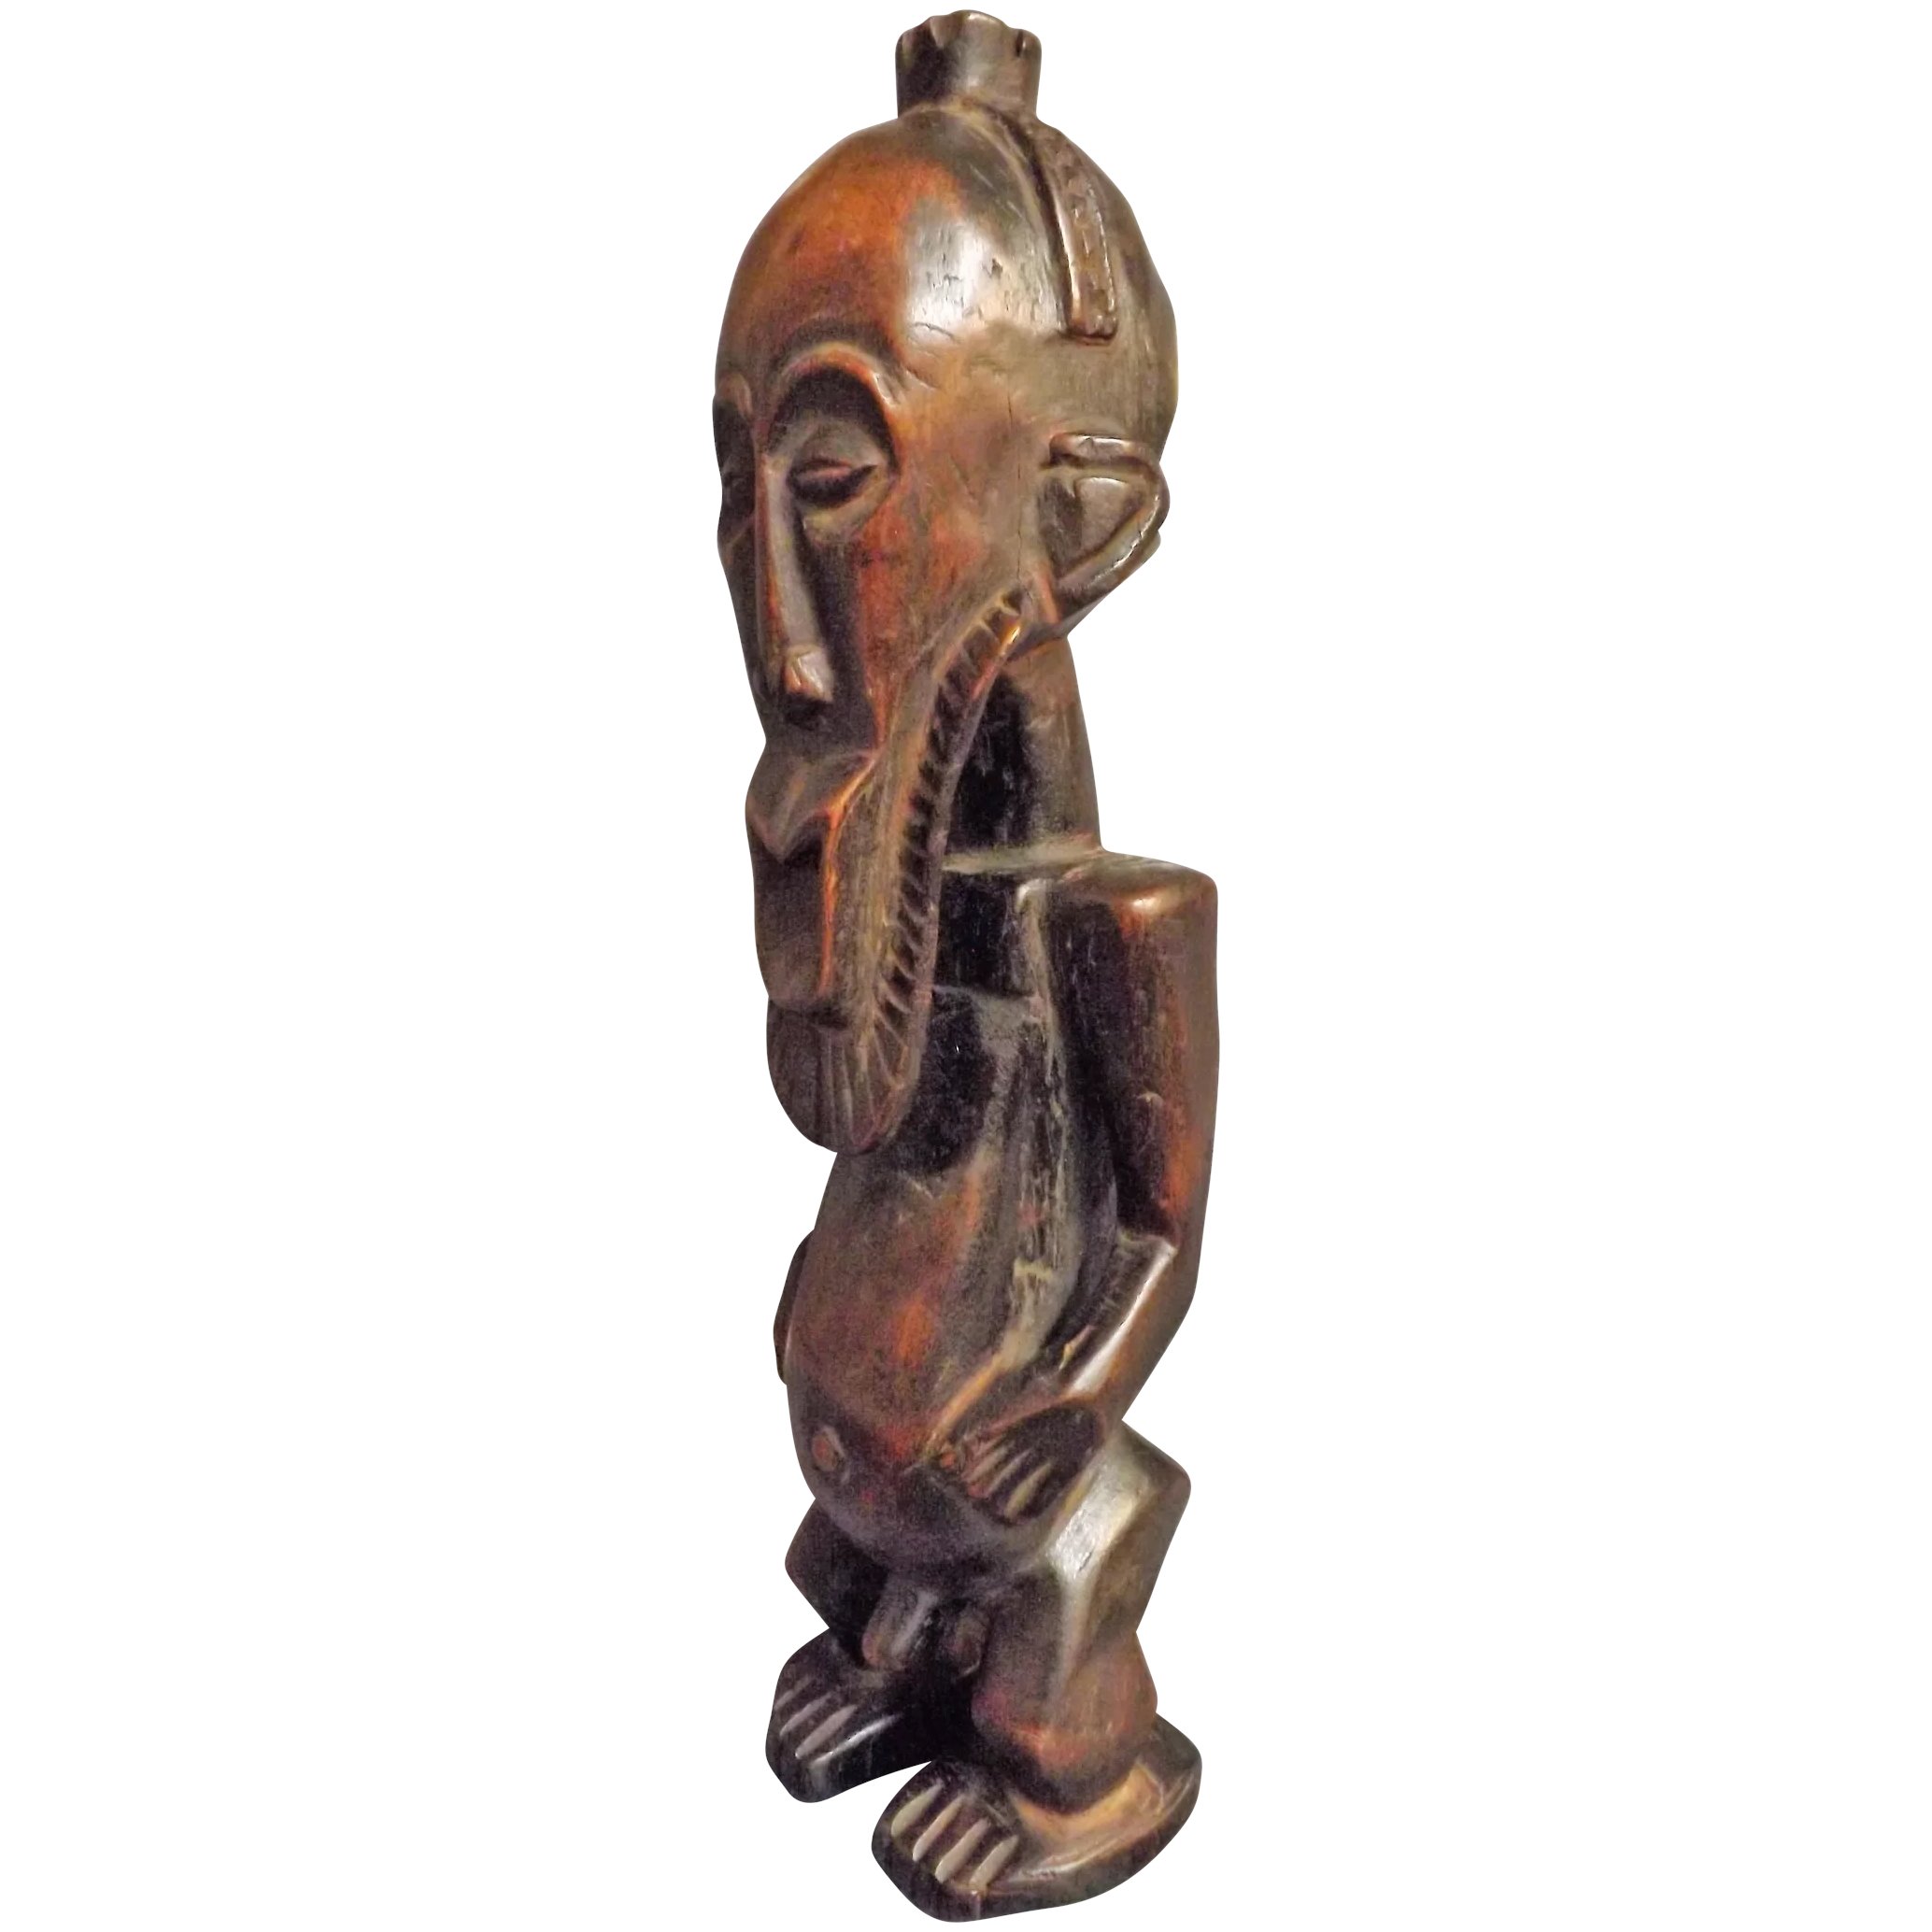 KUSU Tribal Carved Ancestor Figure - Congo Circa Mid to Early 20th Century